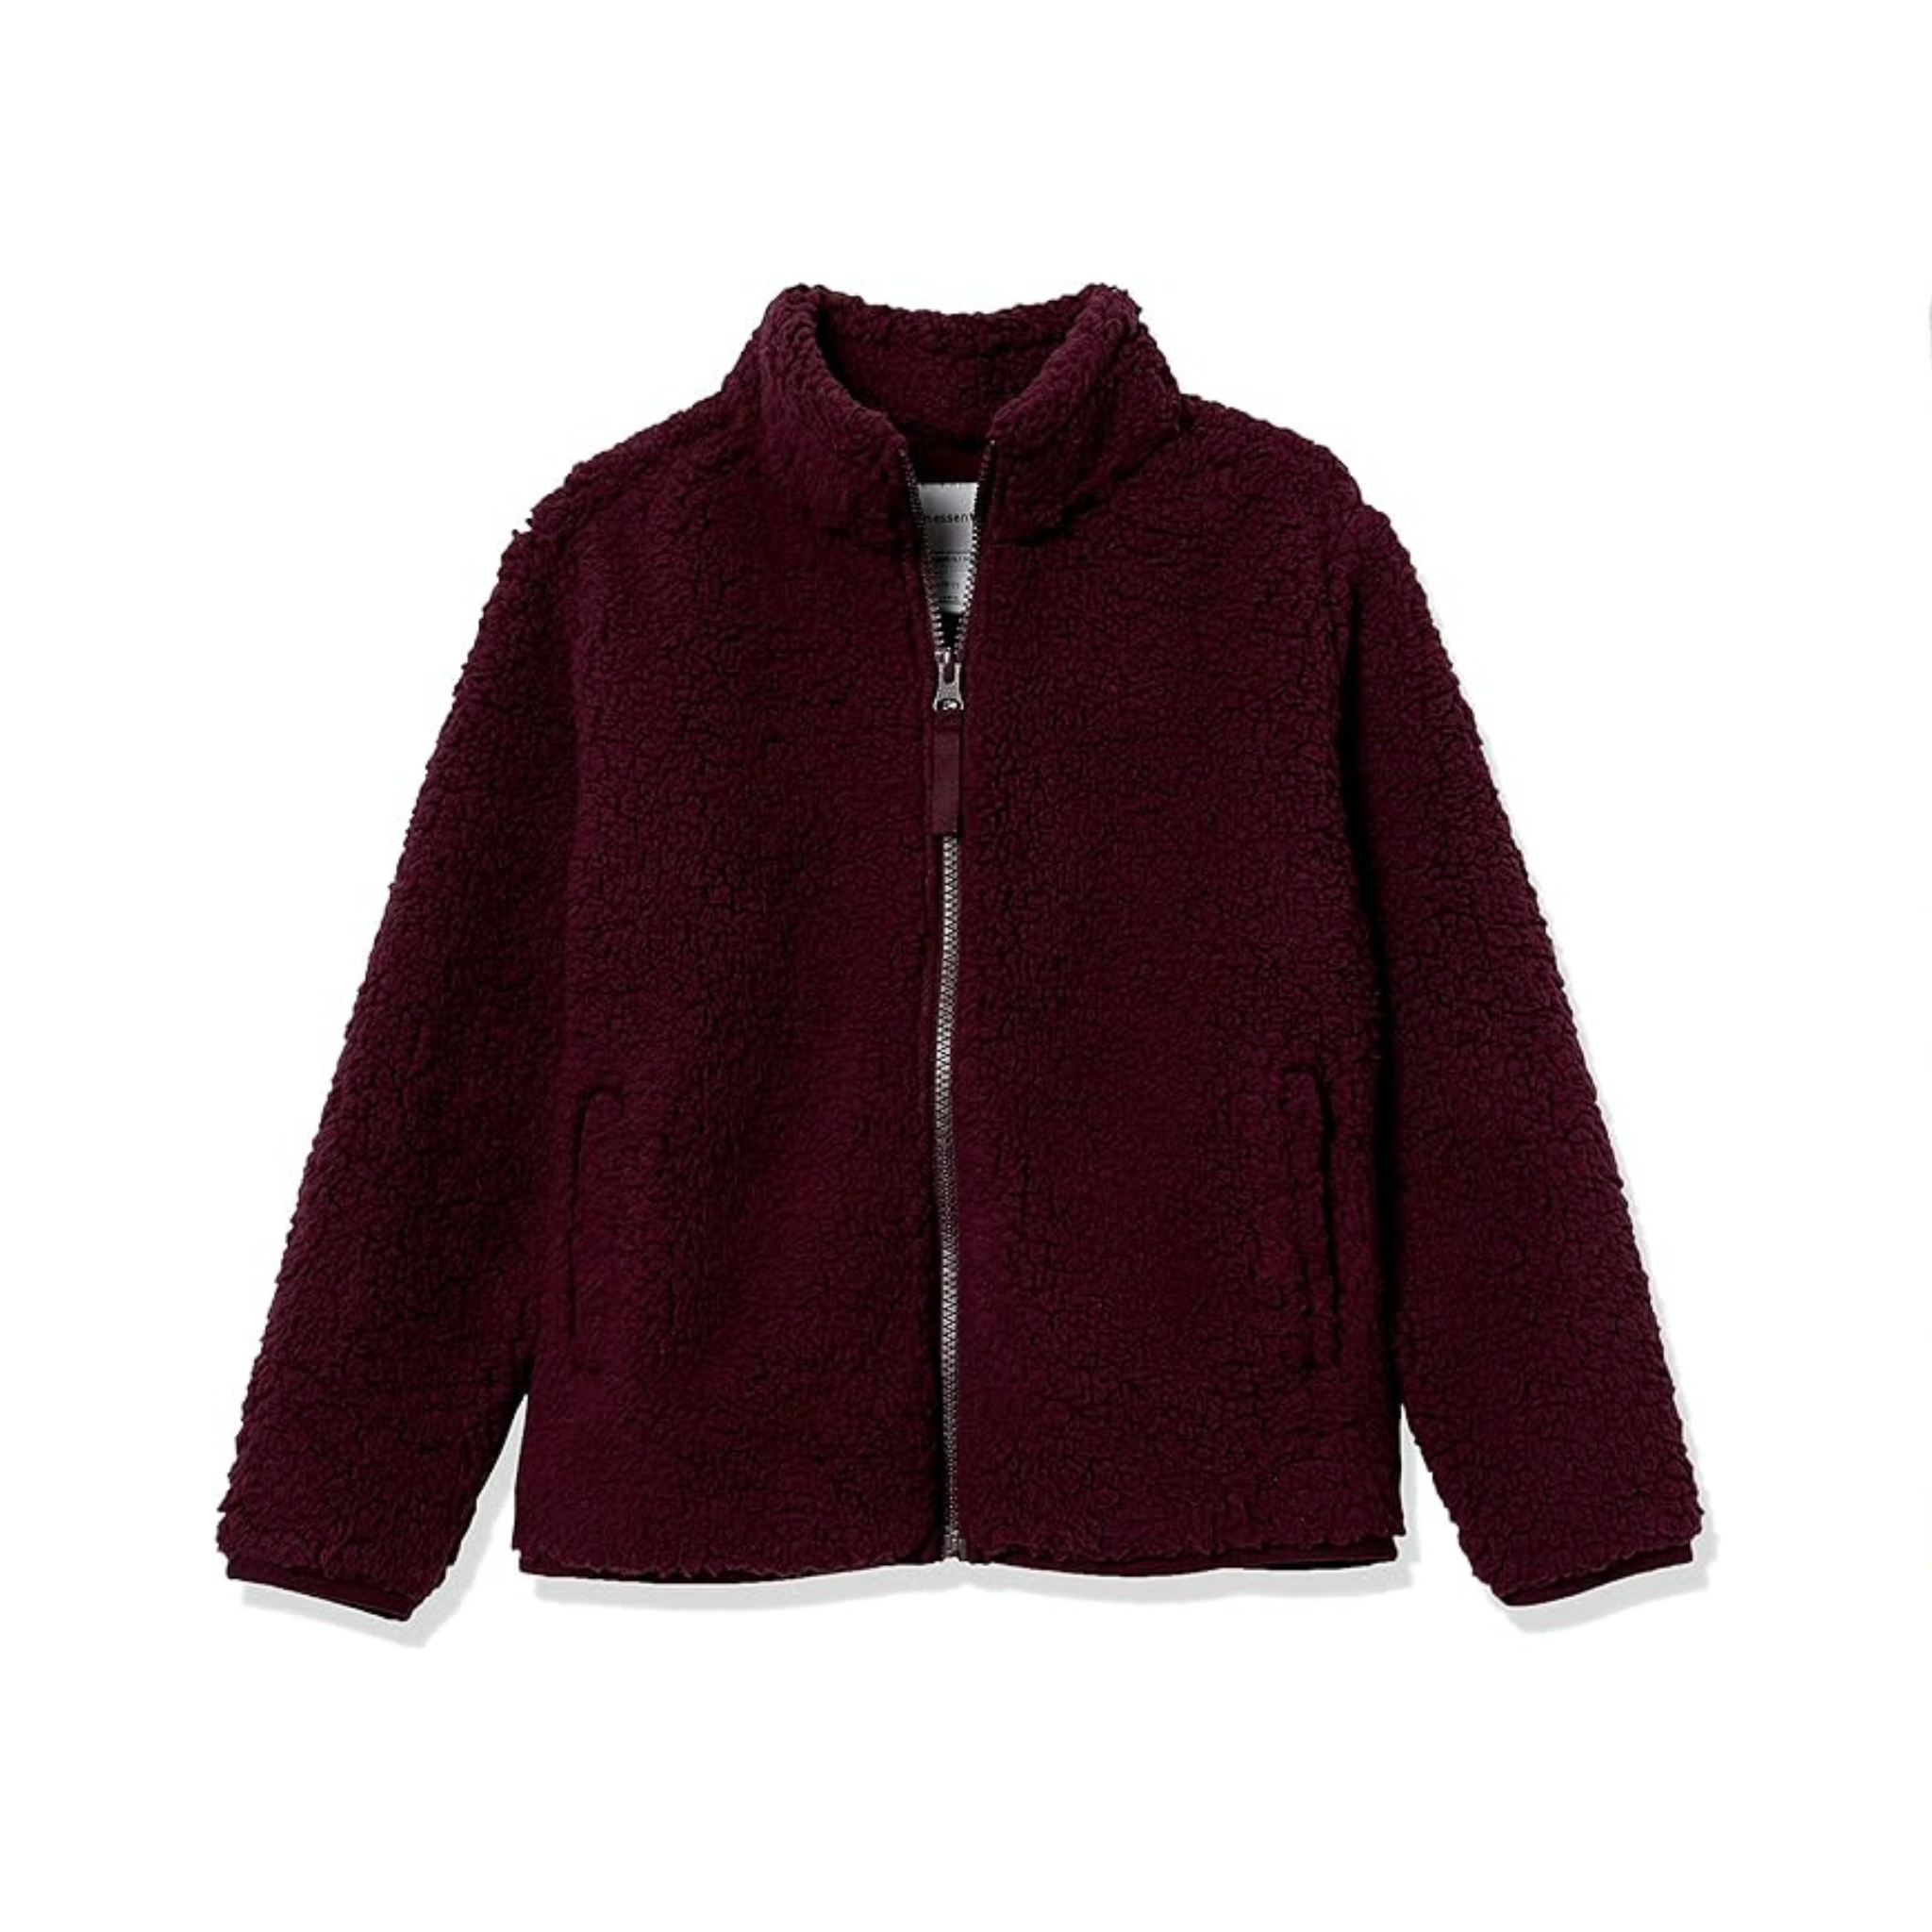 Amazon Essentials Girls and Toddlers’ Sherpa Fleece Full-Zip Jacket